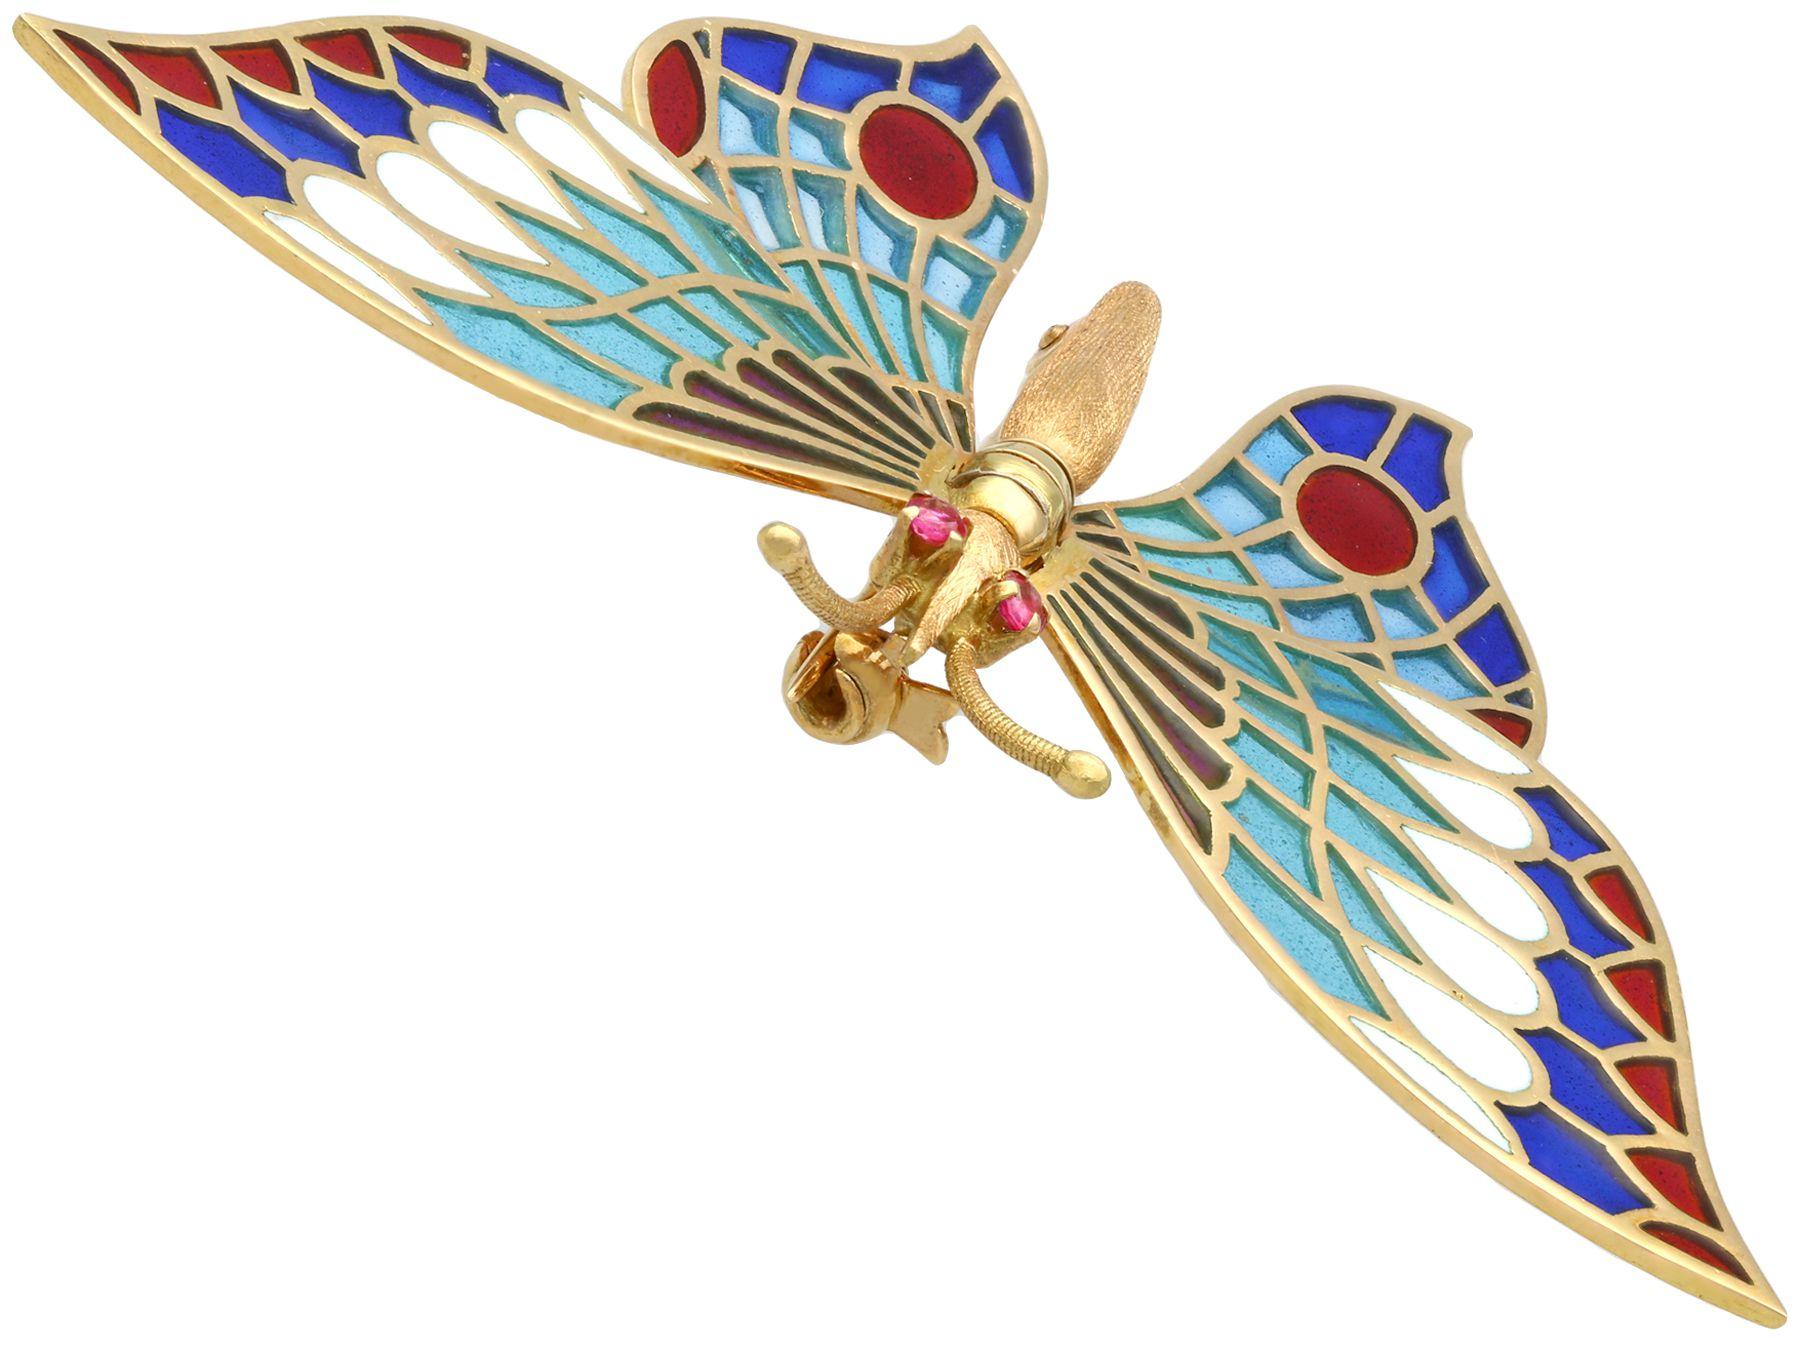 gucci butterfly brooch